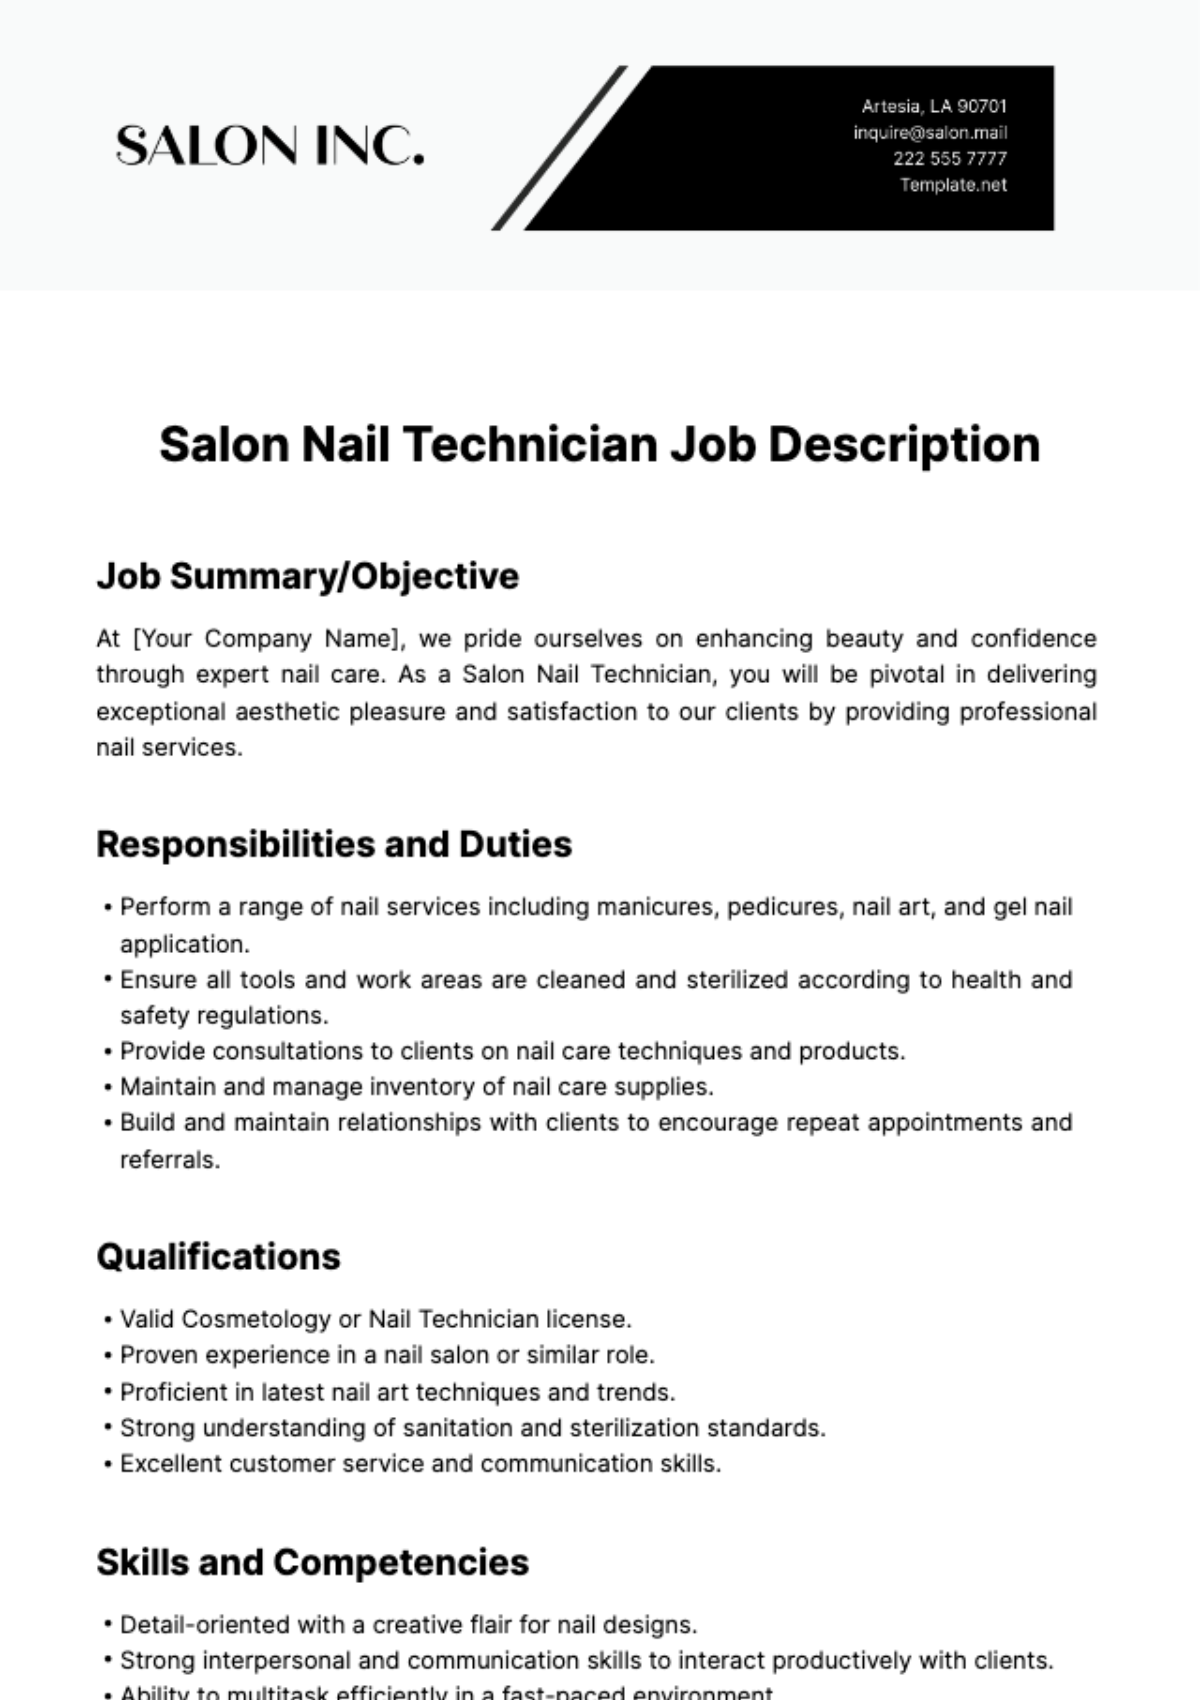 Salon Nail Technician Job Description Template